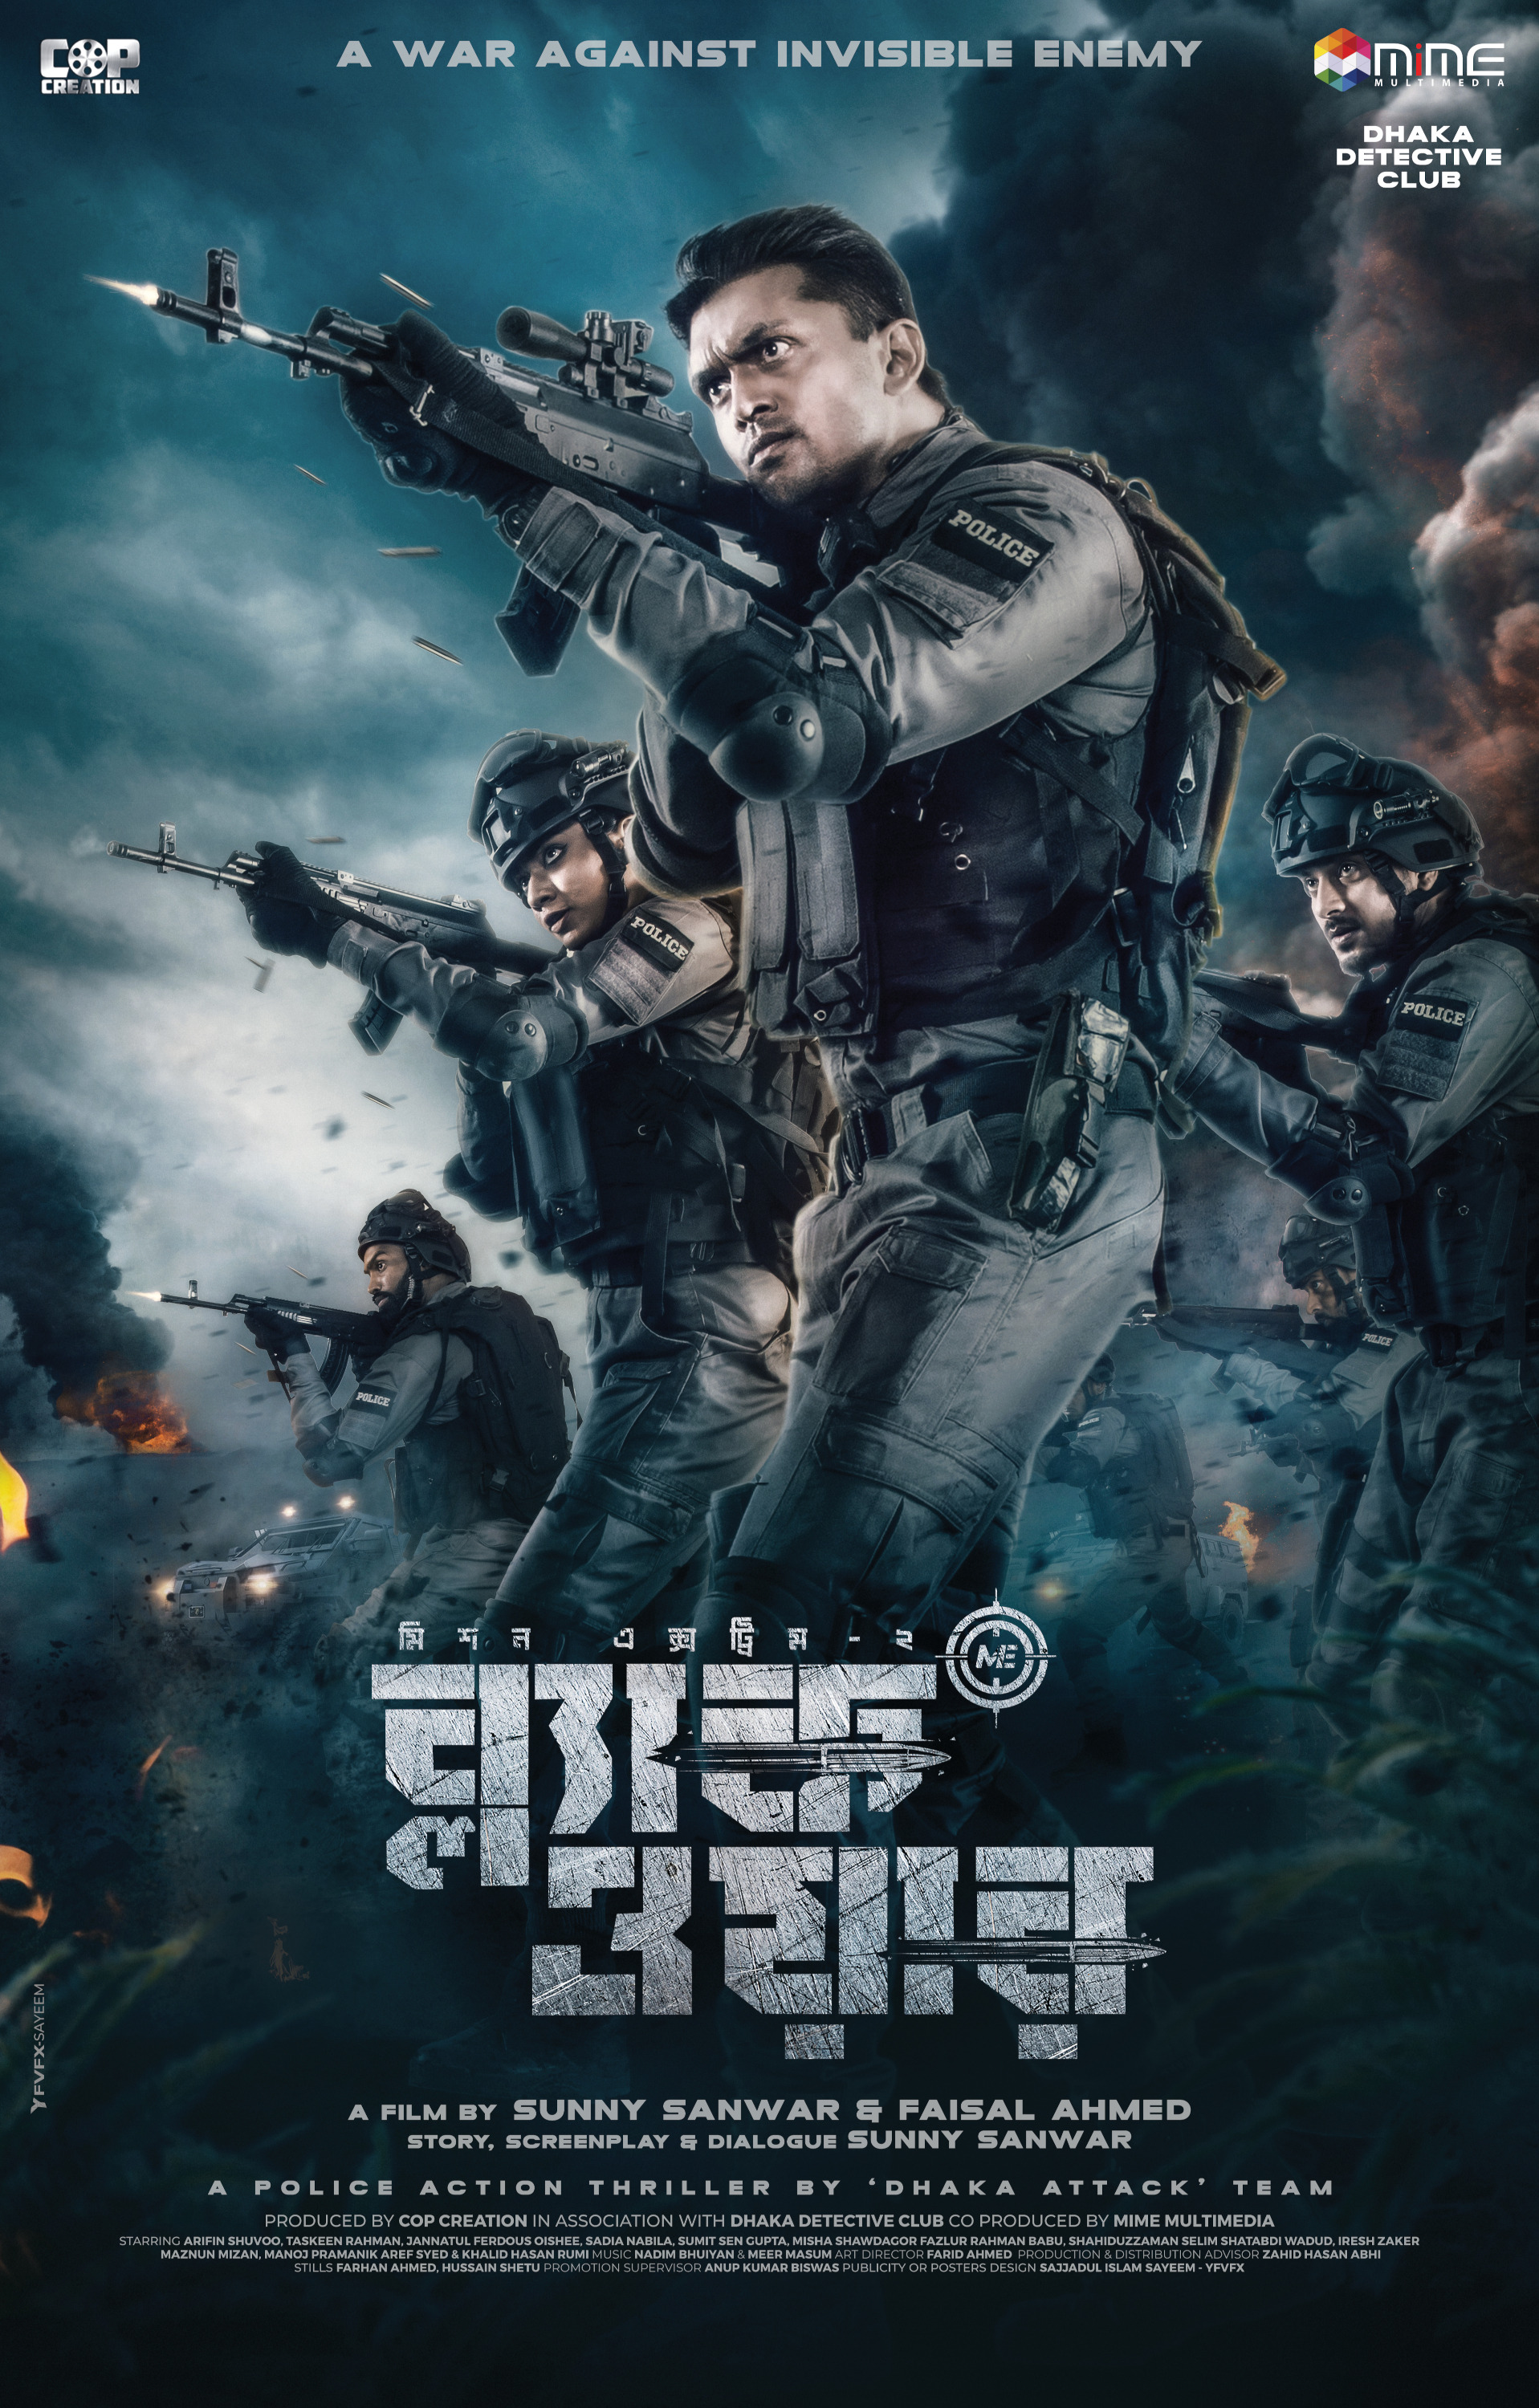 Mega Sized Movie Poster Image for Black War: Mission Exteme 2 (#1 of 4)